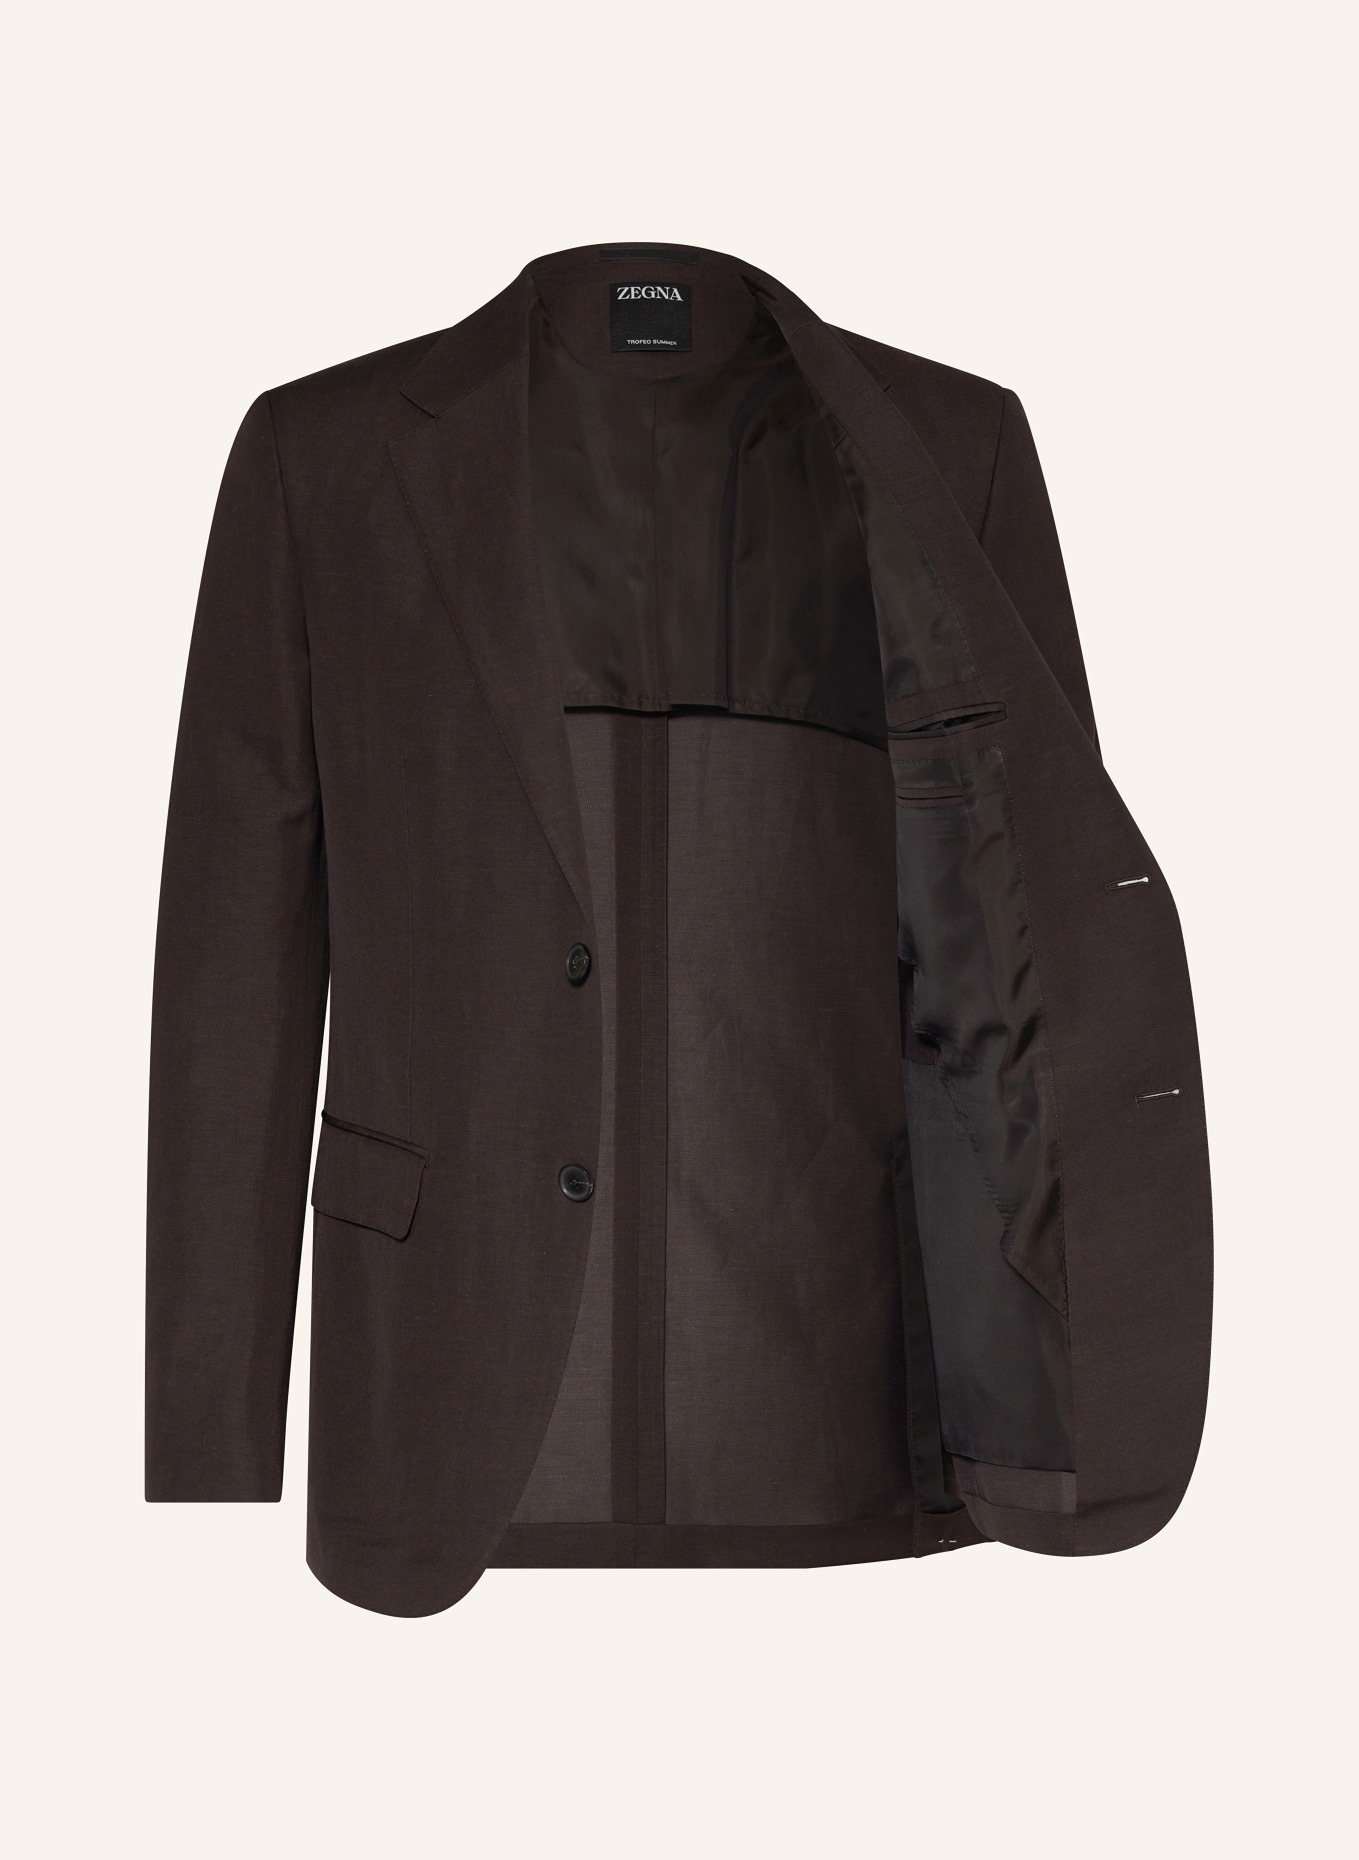 ZEGNA Suit jacket regular fit with linen, Color: 2A7 Brown (Image 4)